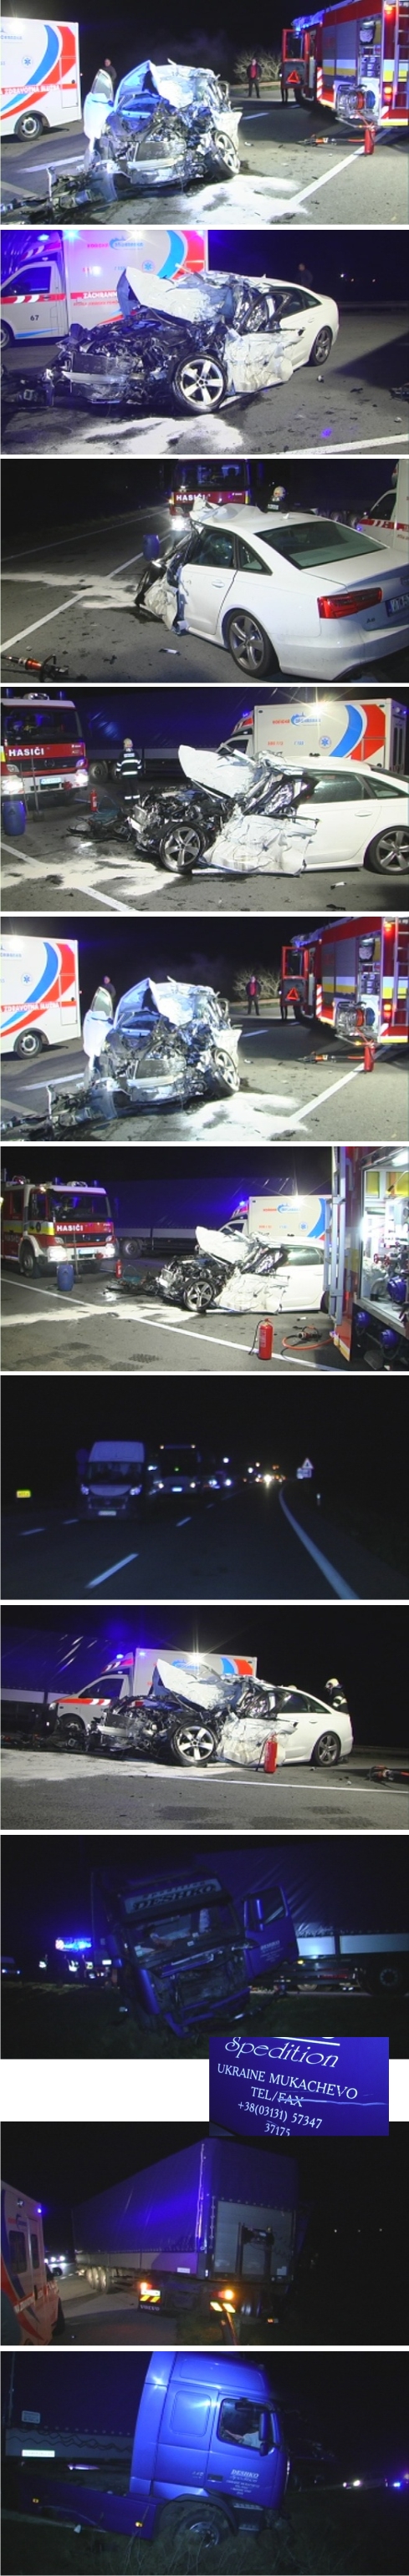 Kamió sa zrazil s Audi, jeden muž zahynul, tragická nehoda